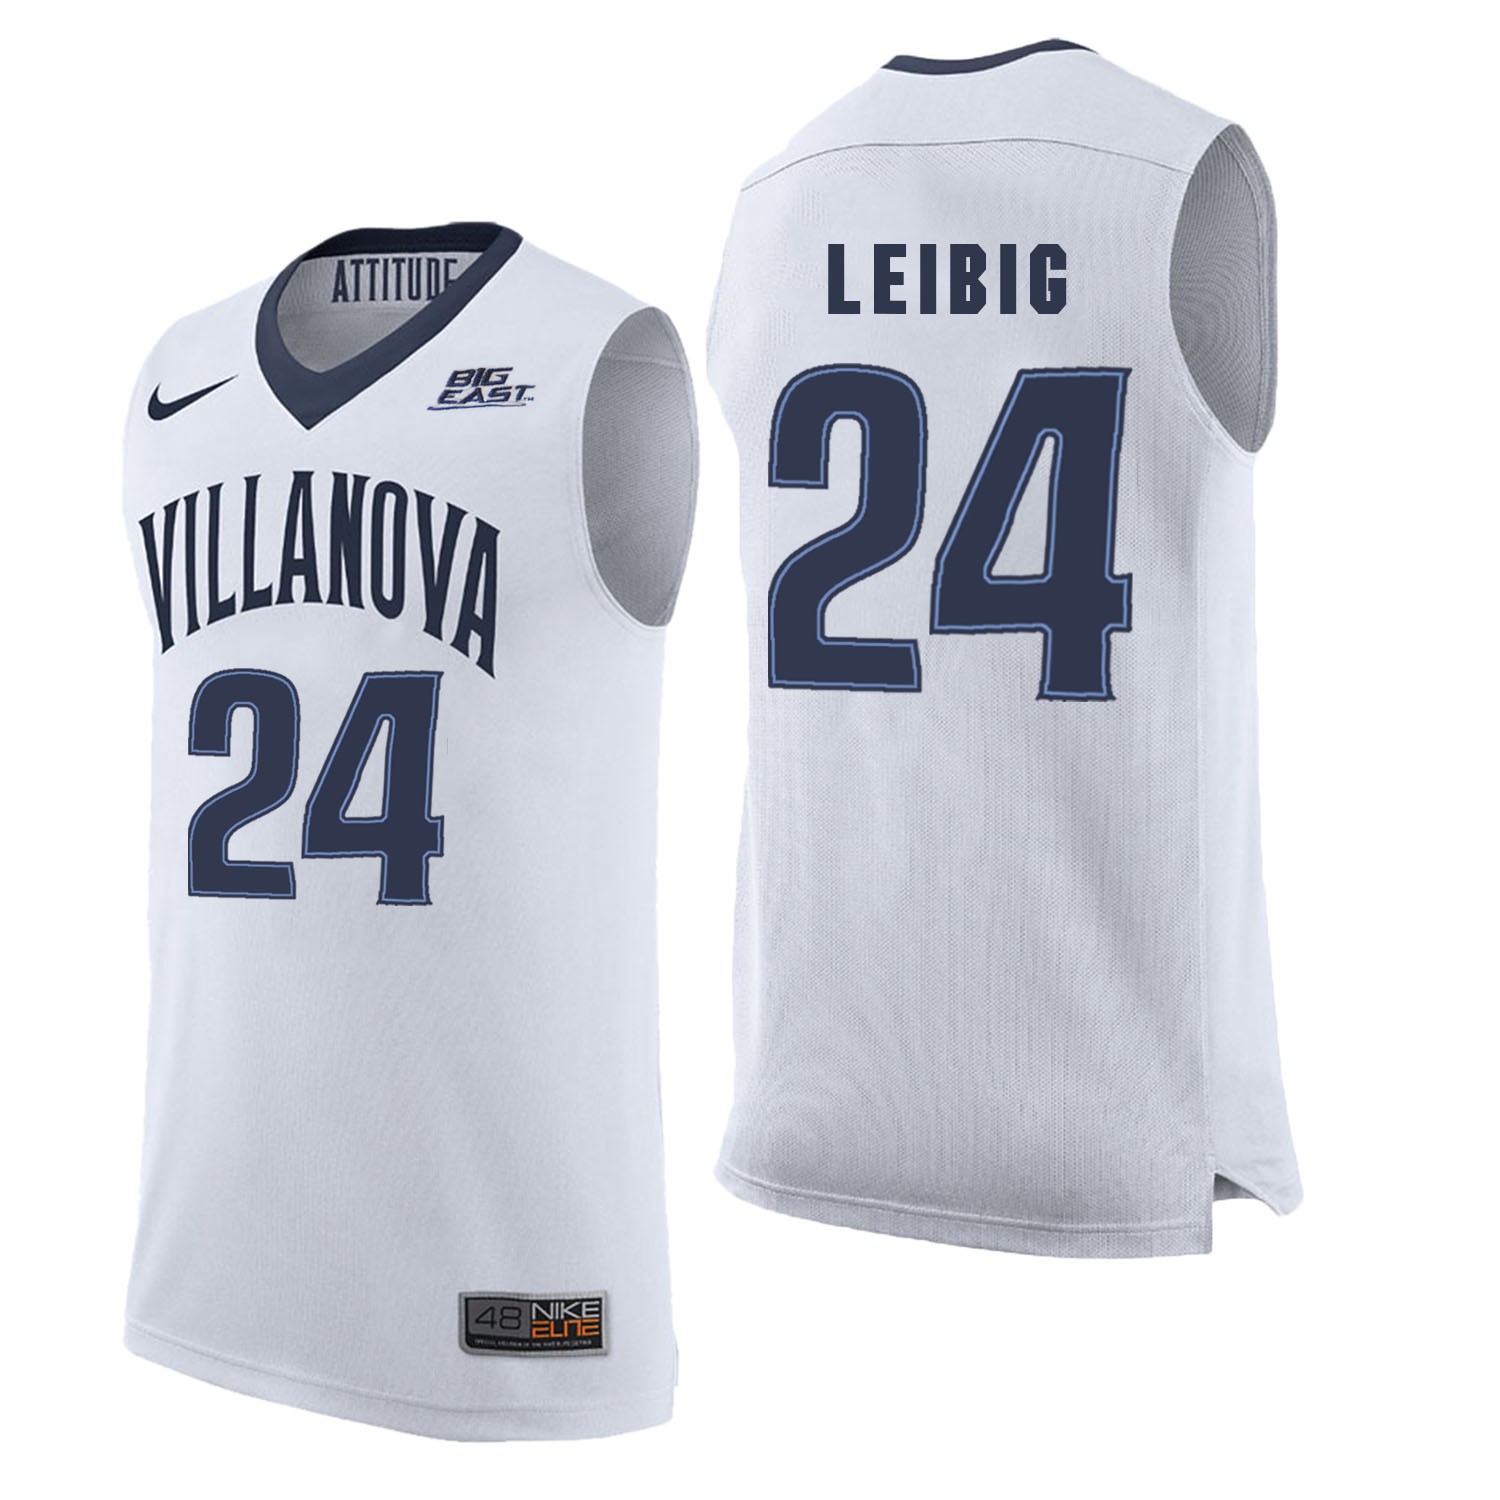 Villanova Wildcats 24 Tom Leibig White College Basketball Elite Jersey